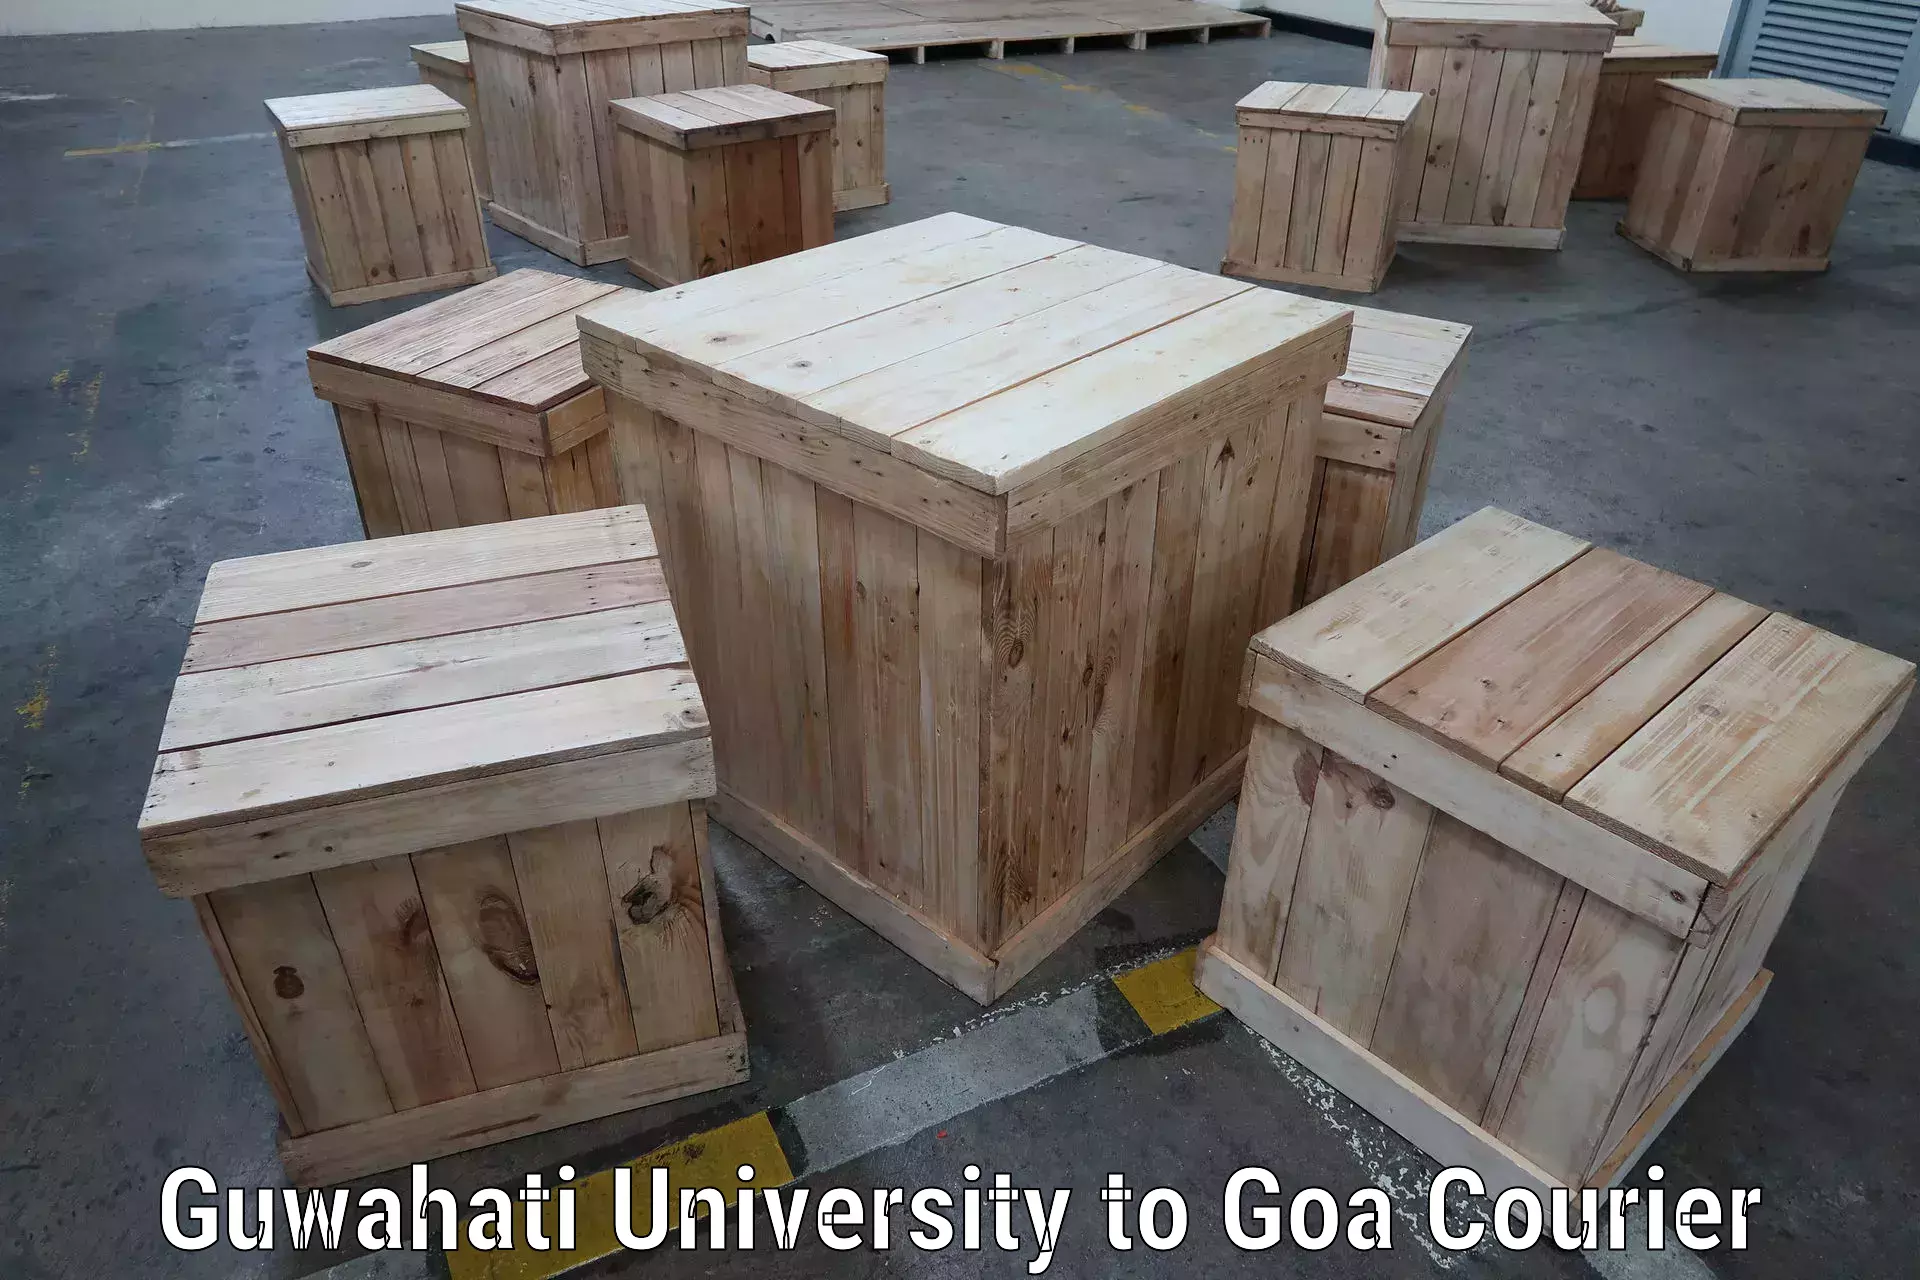 Ocean freight courier Guwahati University to South Goa